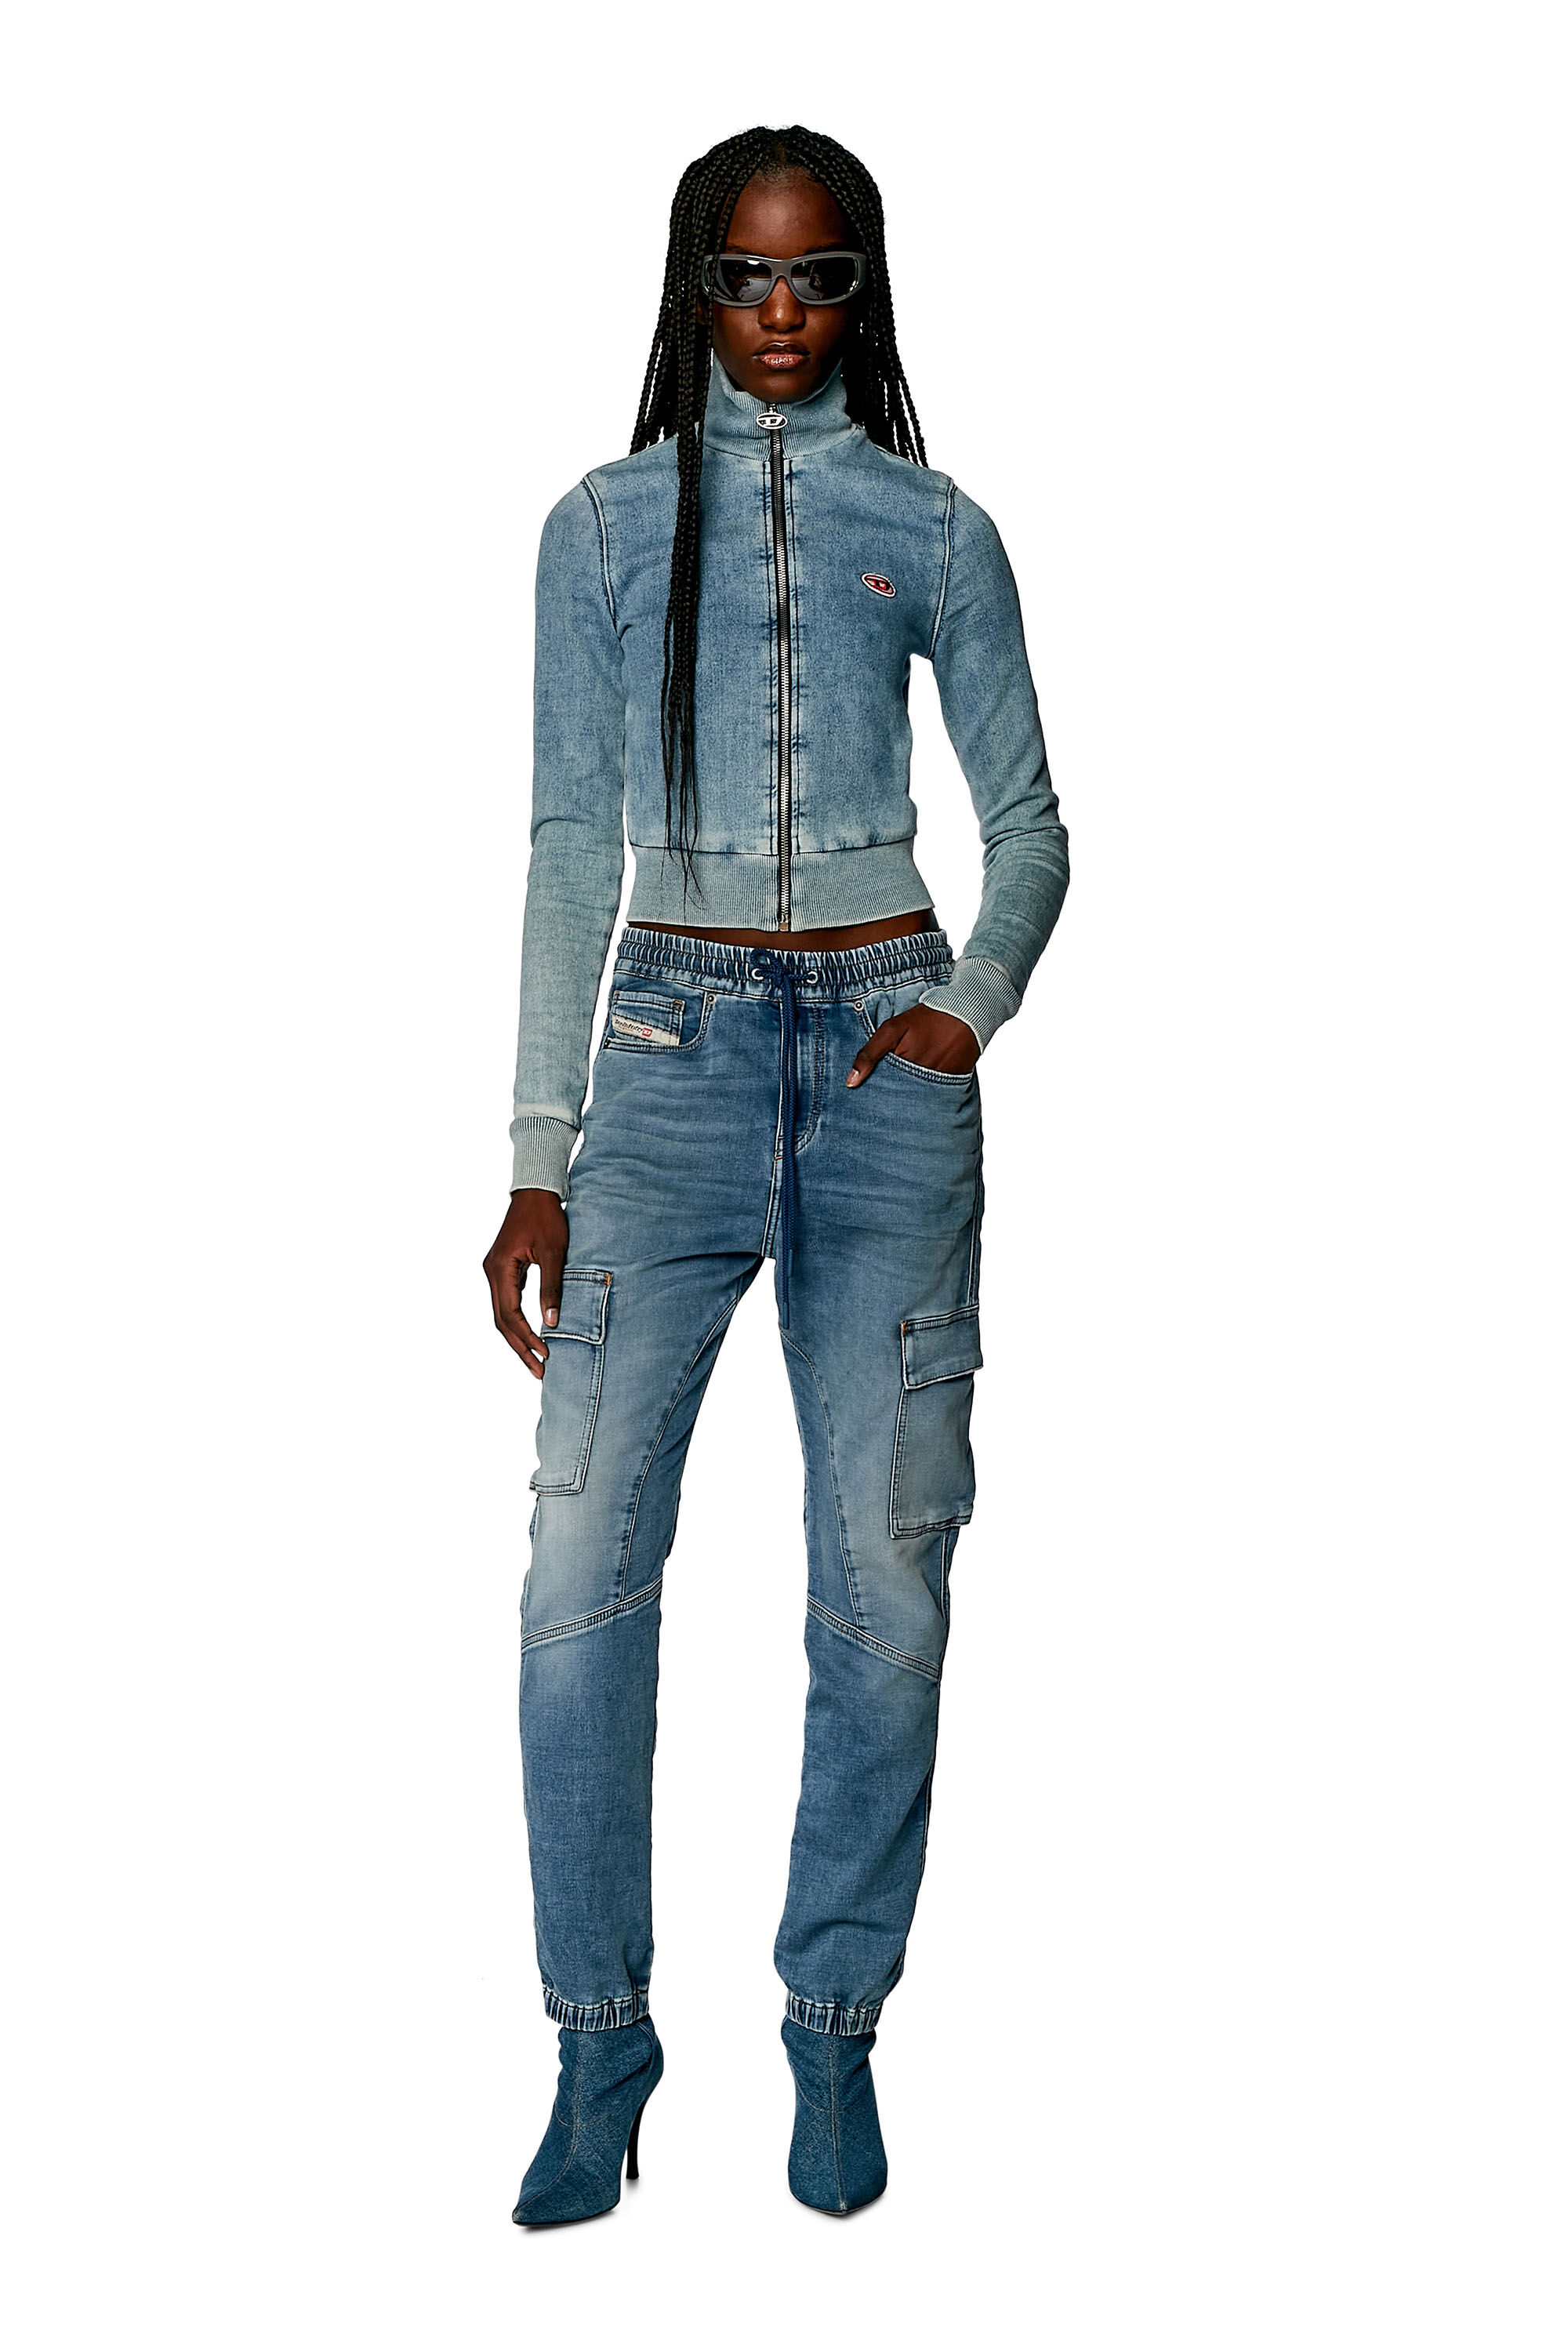 Women's Slim Jeans | Light blue | Diesel 2051 D-Ursy Joggjeans®